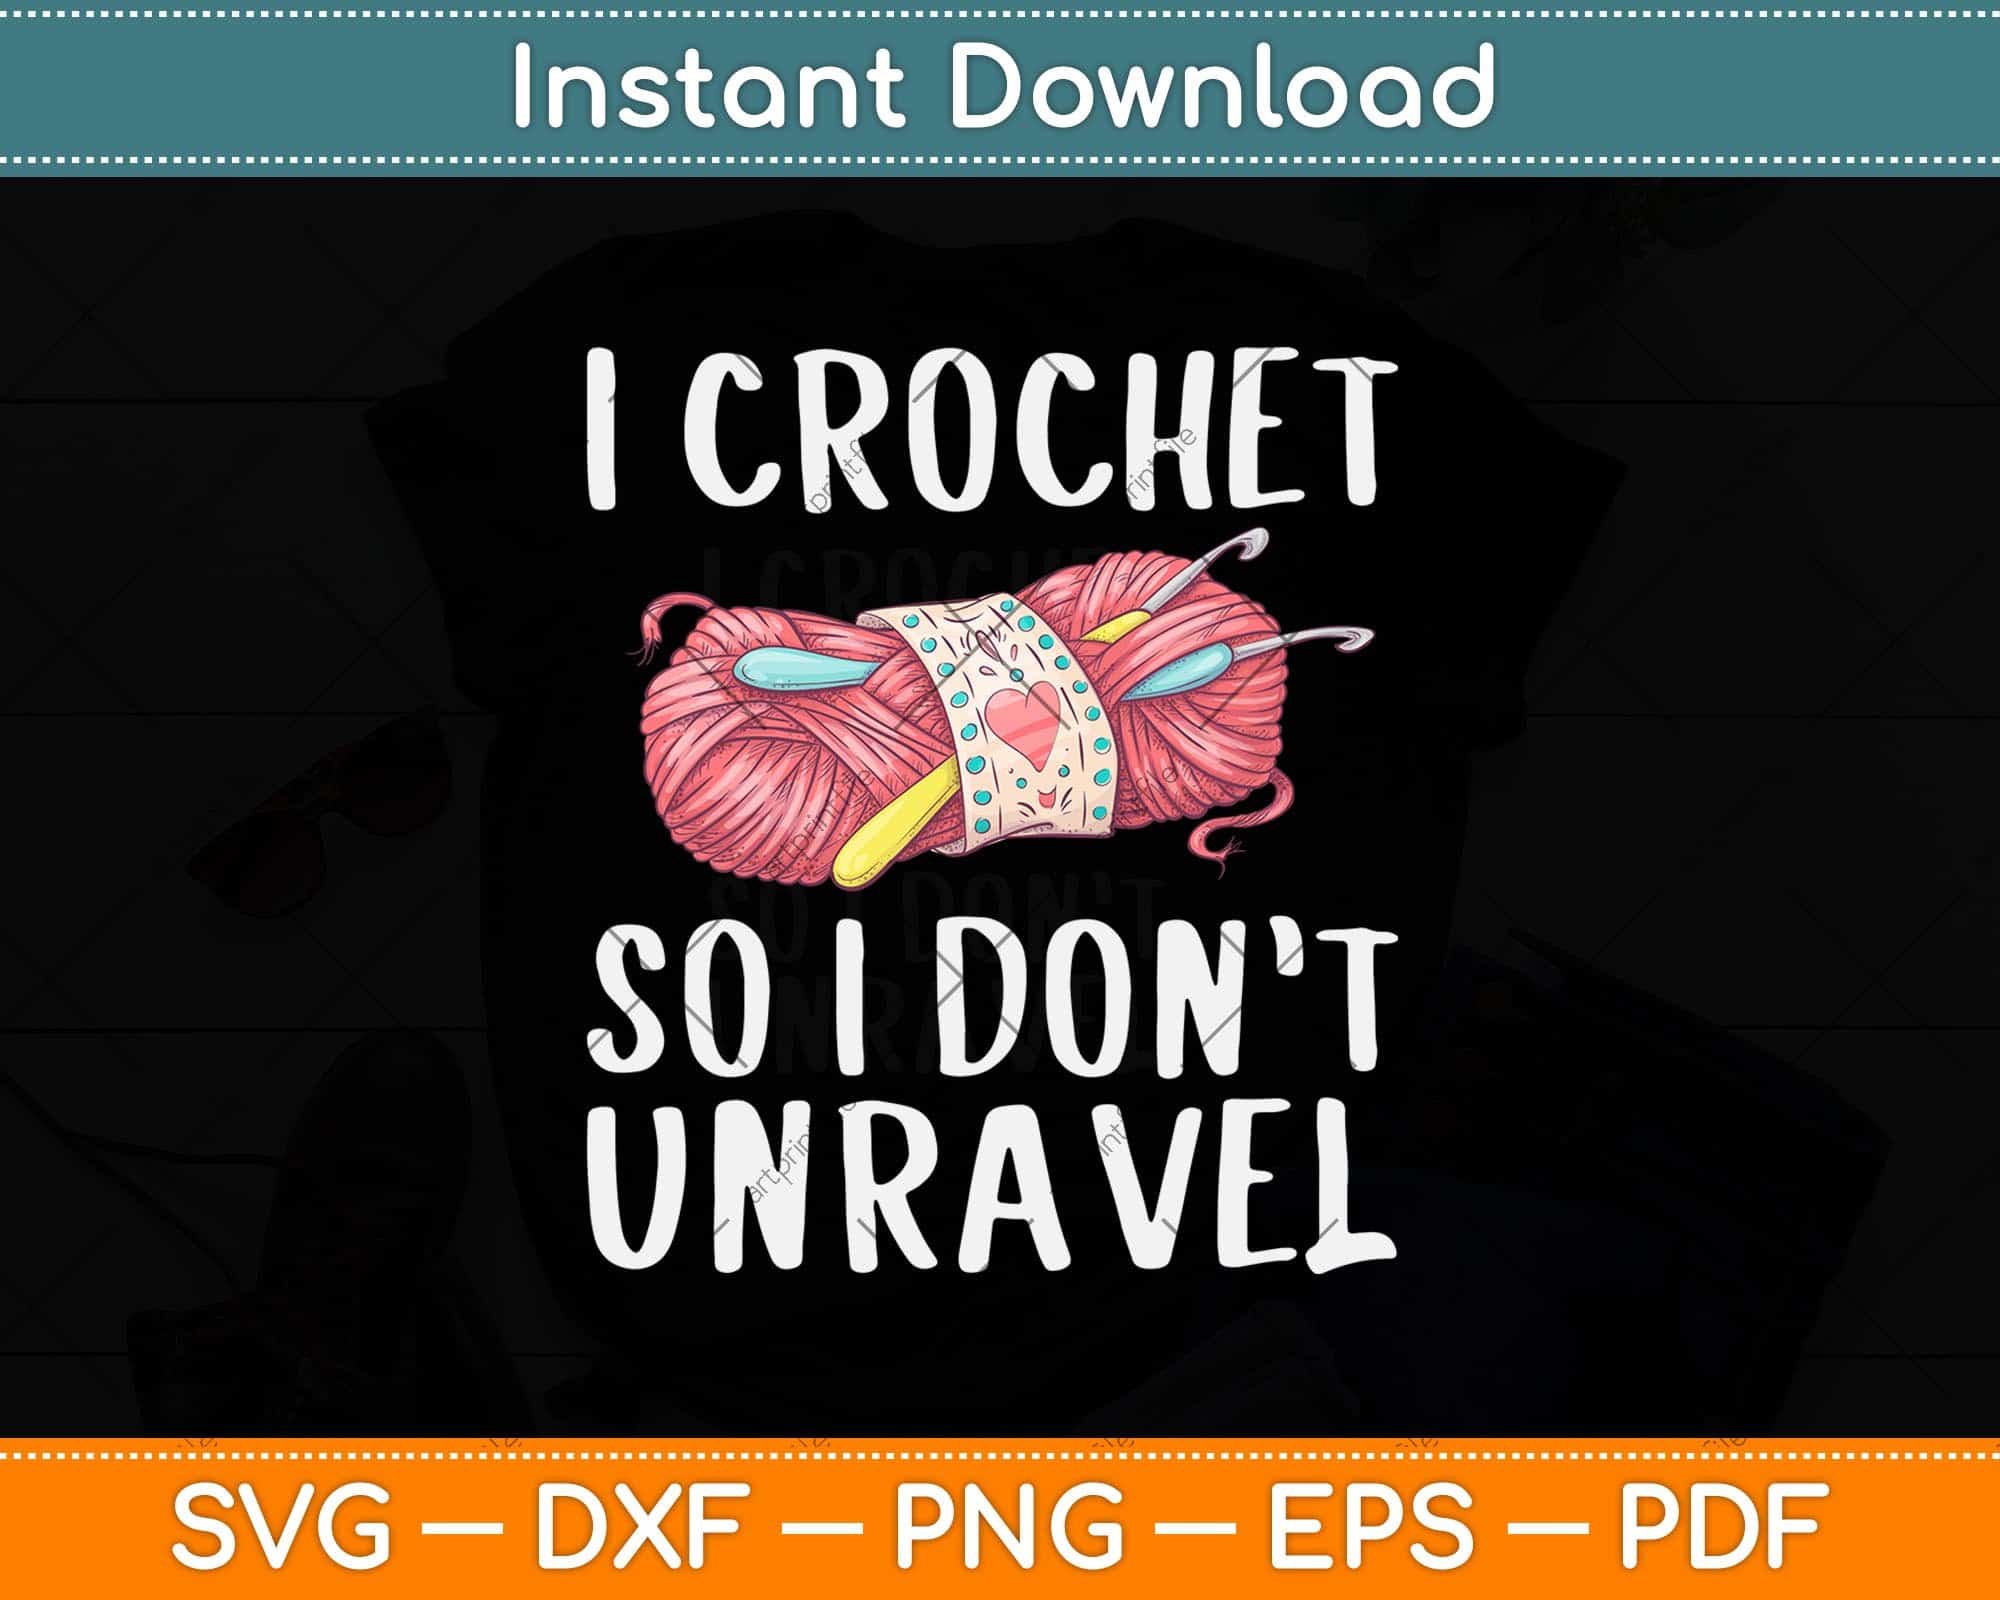 Unravel - Download